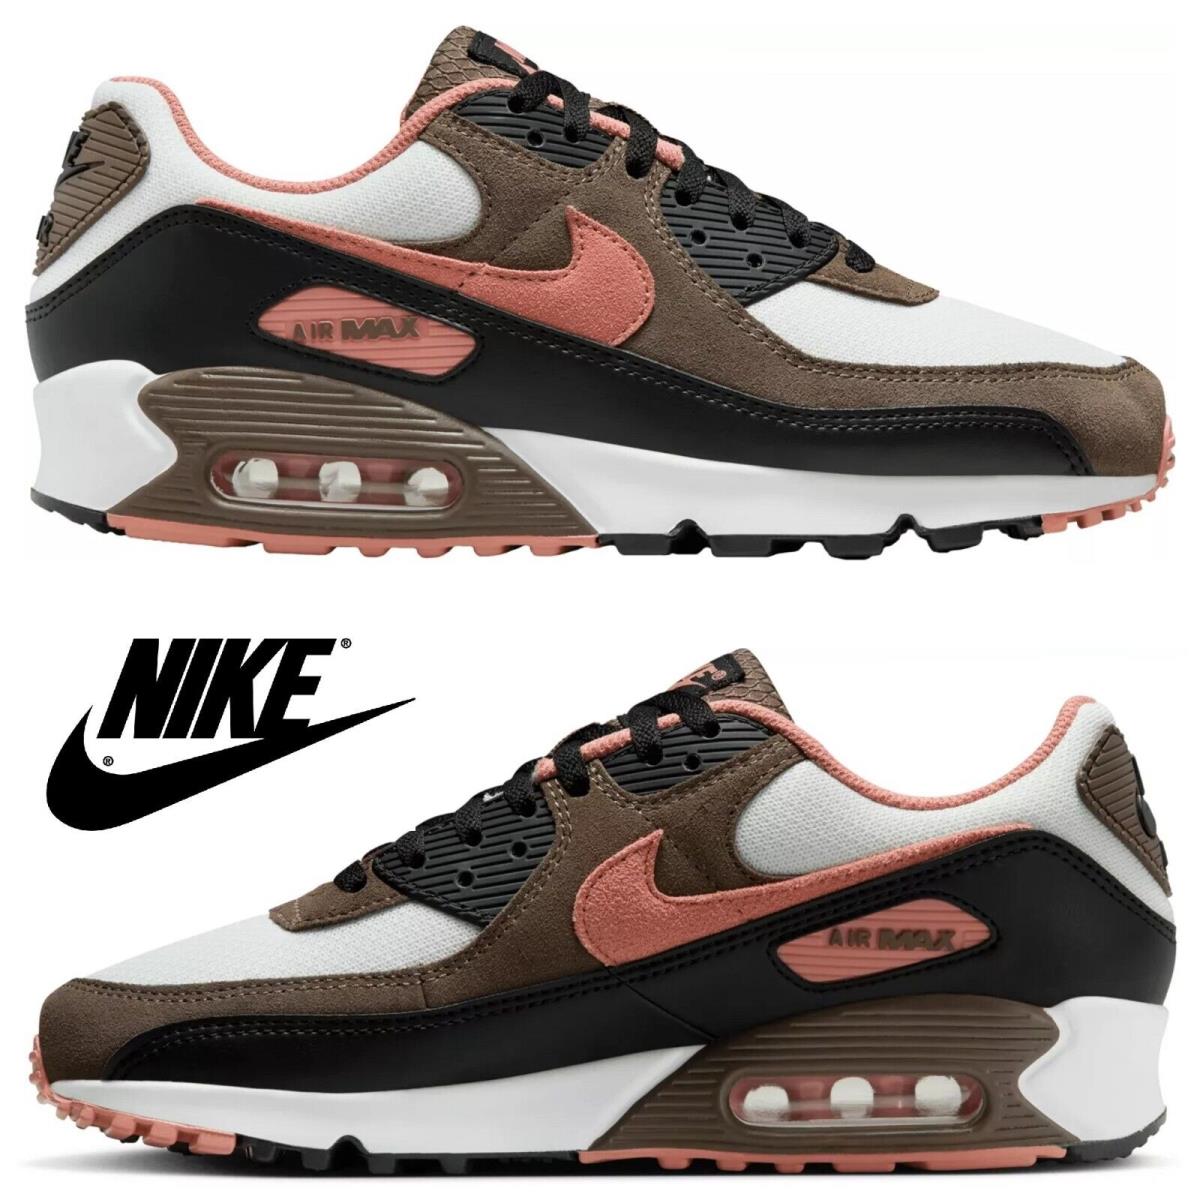 Nike Air Max 90 Casual Men`s Sneakers Running Athletic Sport Comfort Shoes Brown